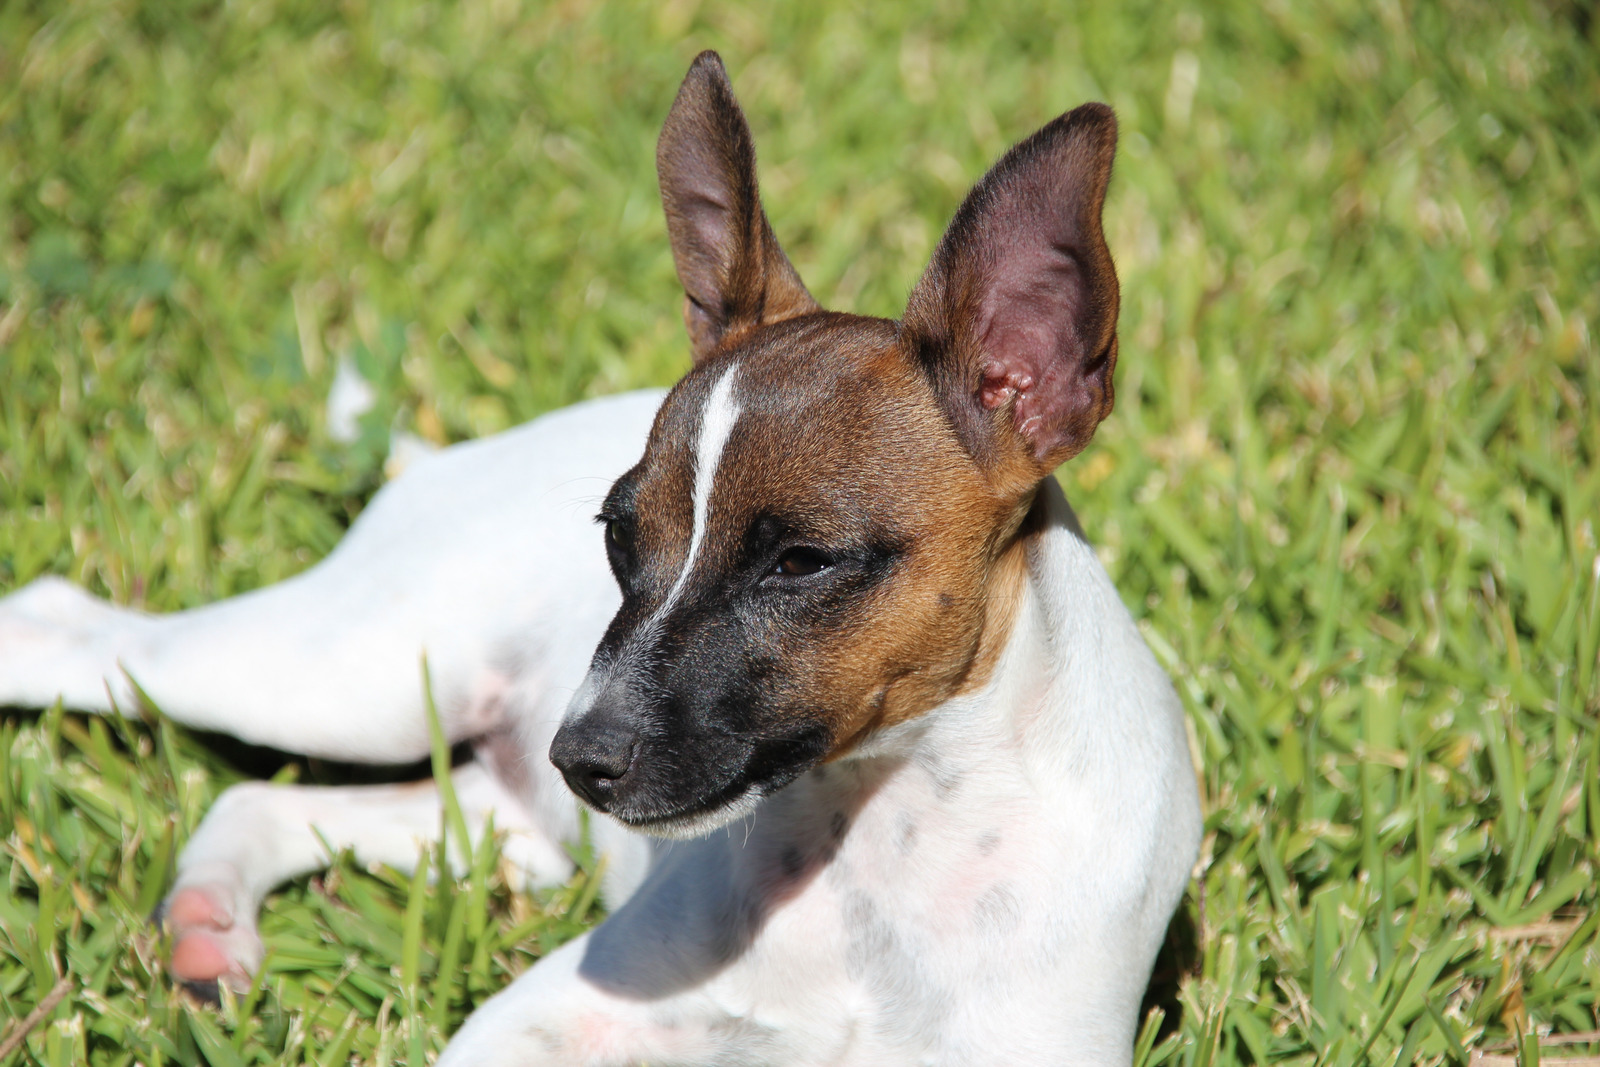 witbruine hond na sterilisatie ligt op gras